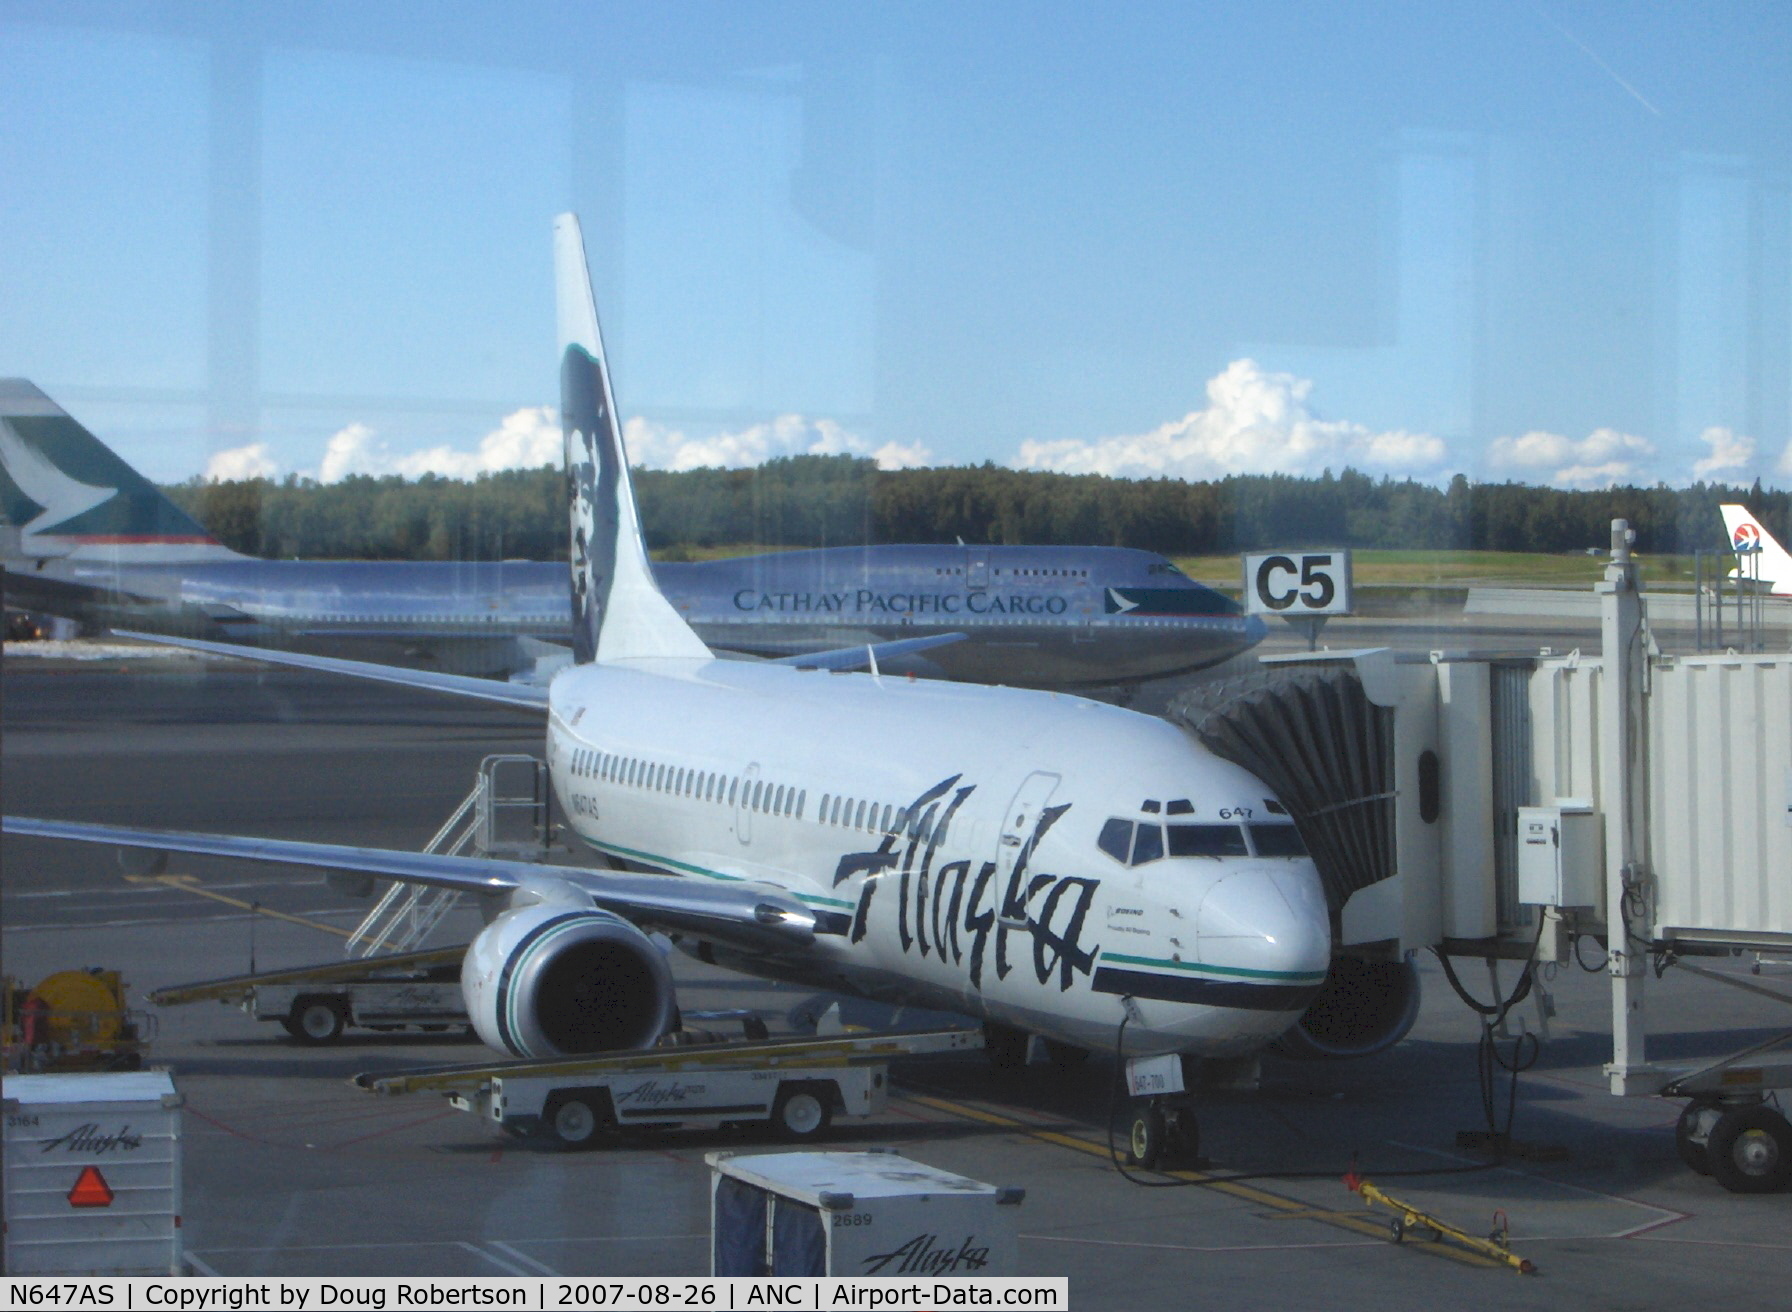 N647AS, 2003 Boeing 737-790 C/N 33012, 2003 Boeing 737-790 of Alaska Airlines, two CFM56-7B20 20,600 lb st turbofans. Flight 185 departing to Fairbanks Int'l FAI